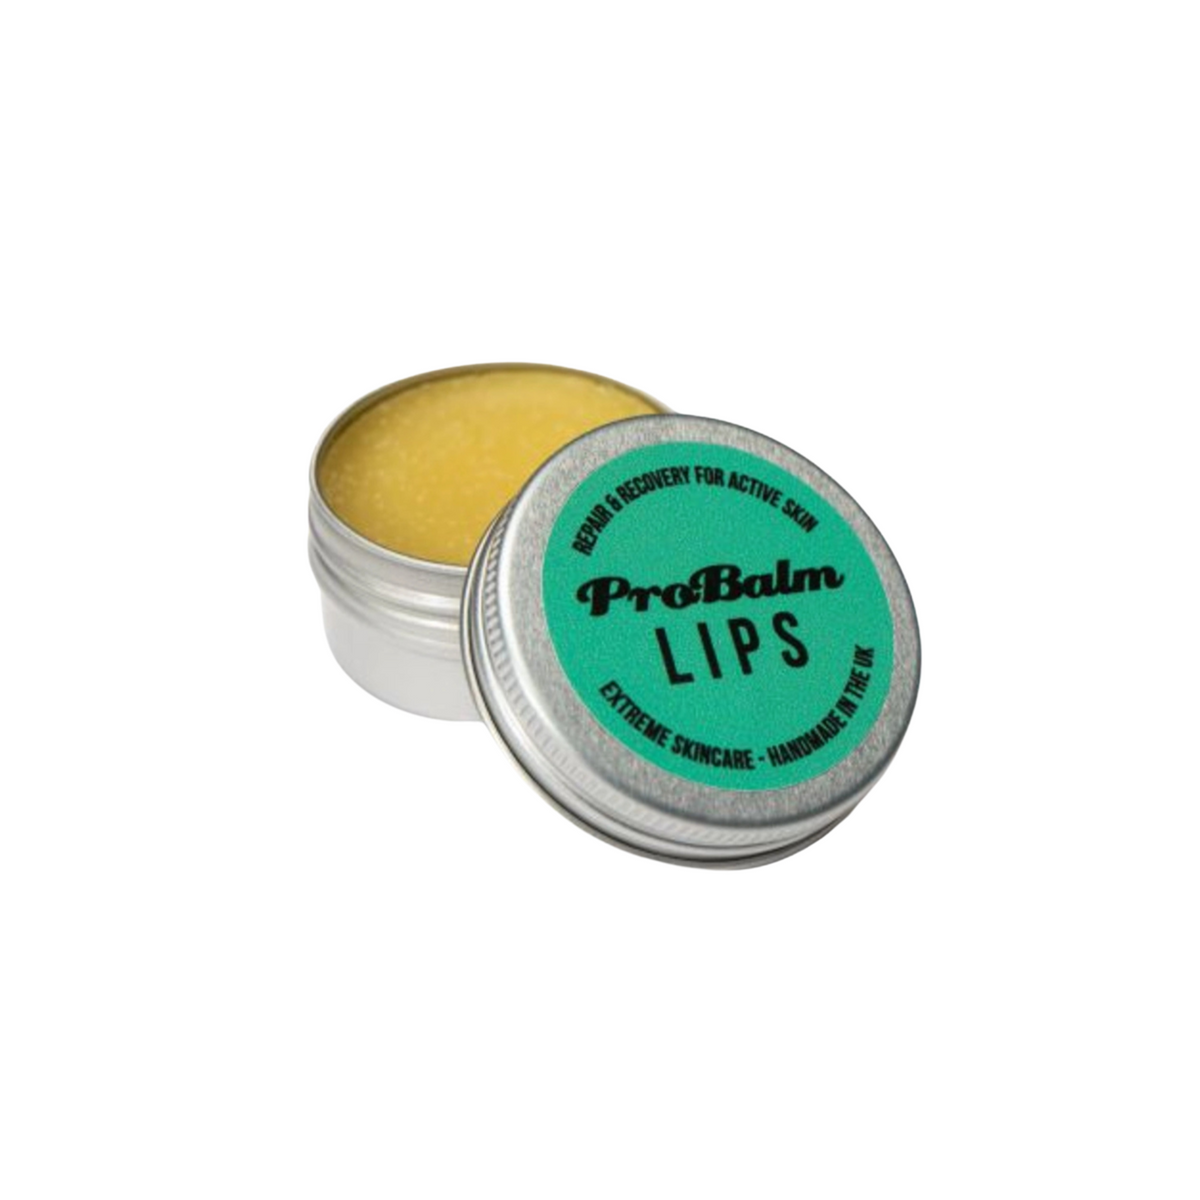 ProBalm Lip Balm tin with green lid